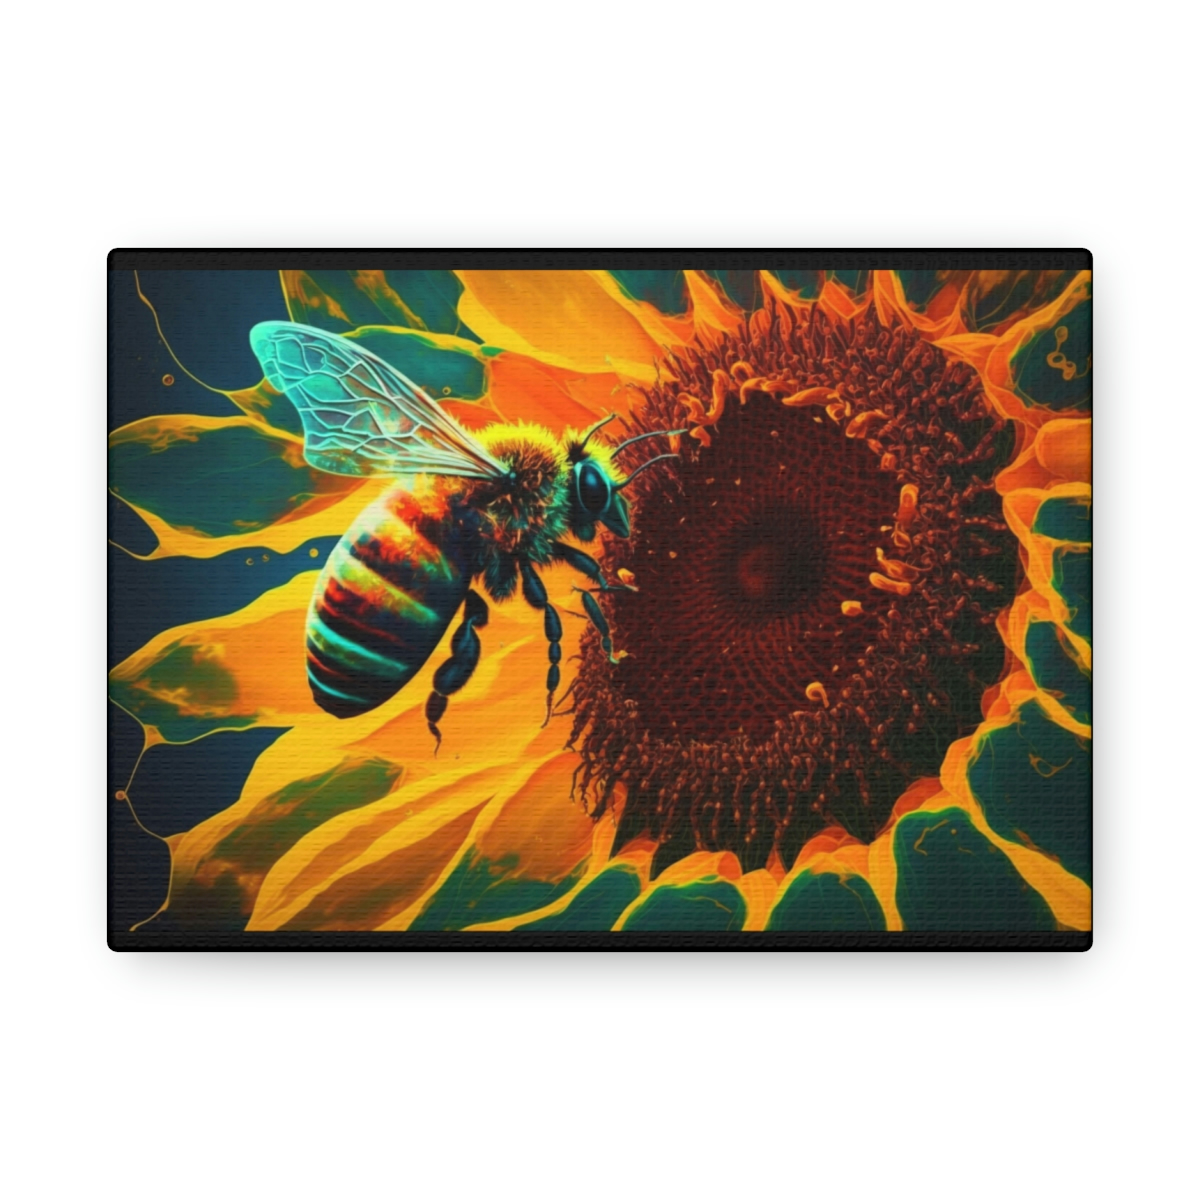 Trippy Art Canvas Print: Nectar In The Sun